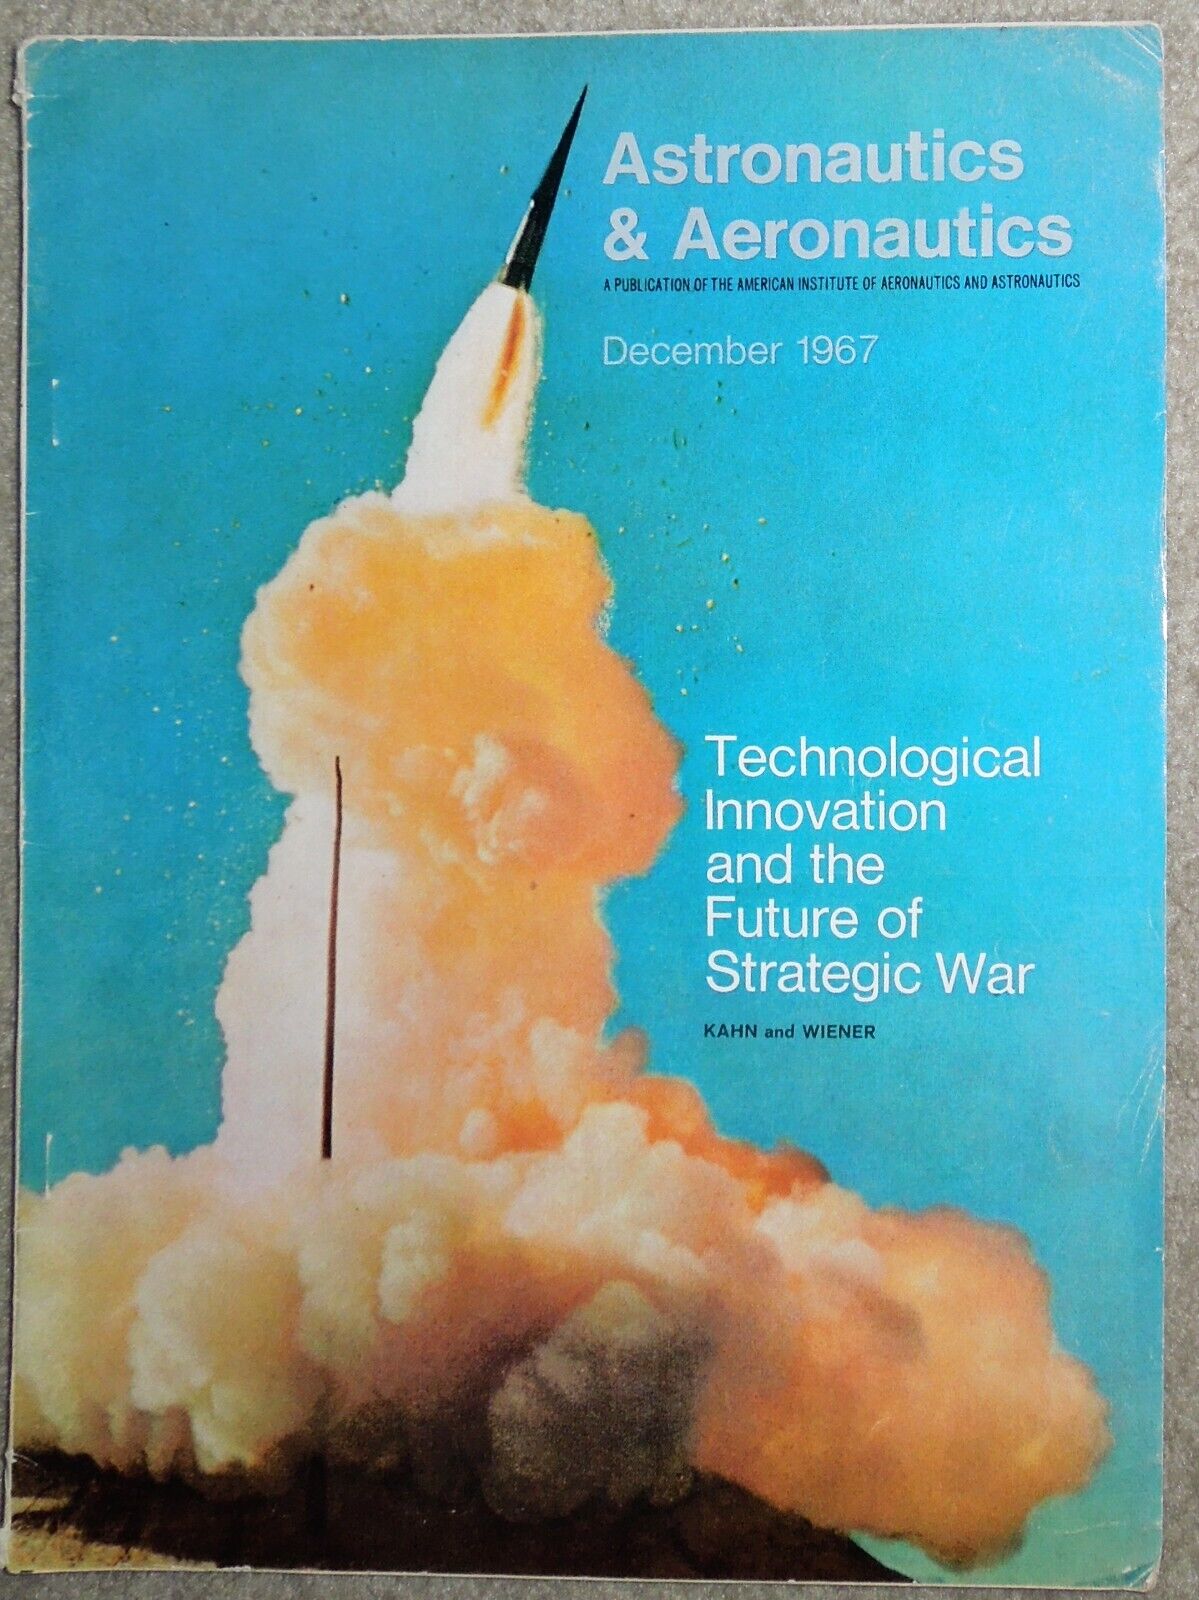 Astronautics & Aeronautics Aviation Industry Trade Magazine, December 1967